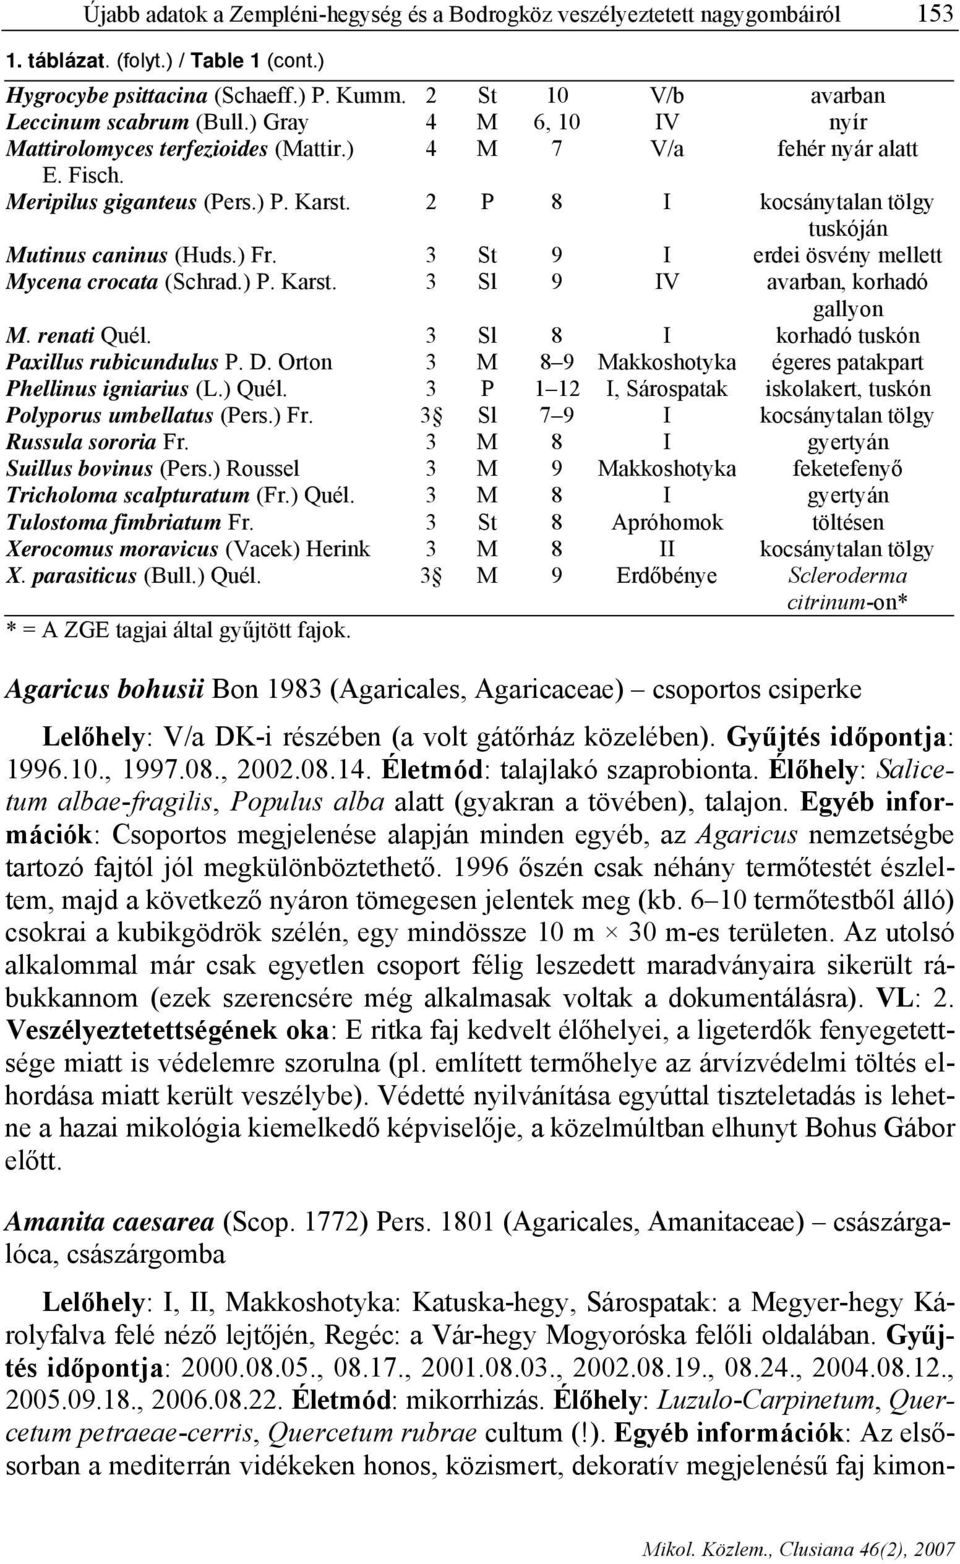 2 P 8 I kocsánytalan tölgy tuskóján Mutinus caninus (Huds.) Fr. 3 St 9 I erdei ösvény mellett Mycena crocata (Schrad.) P. Karst. 3 Sl 9 IV avarban, korhadó gallyon M. renati Quél.